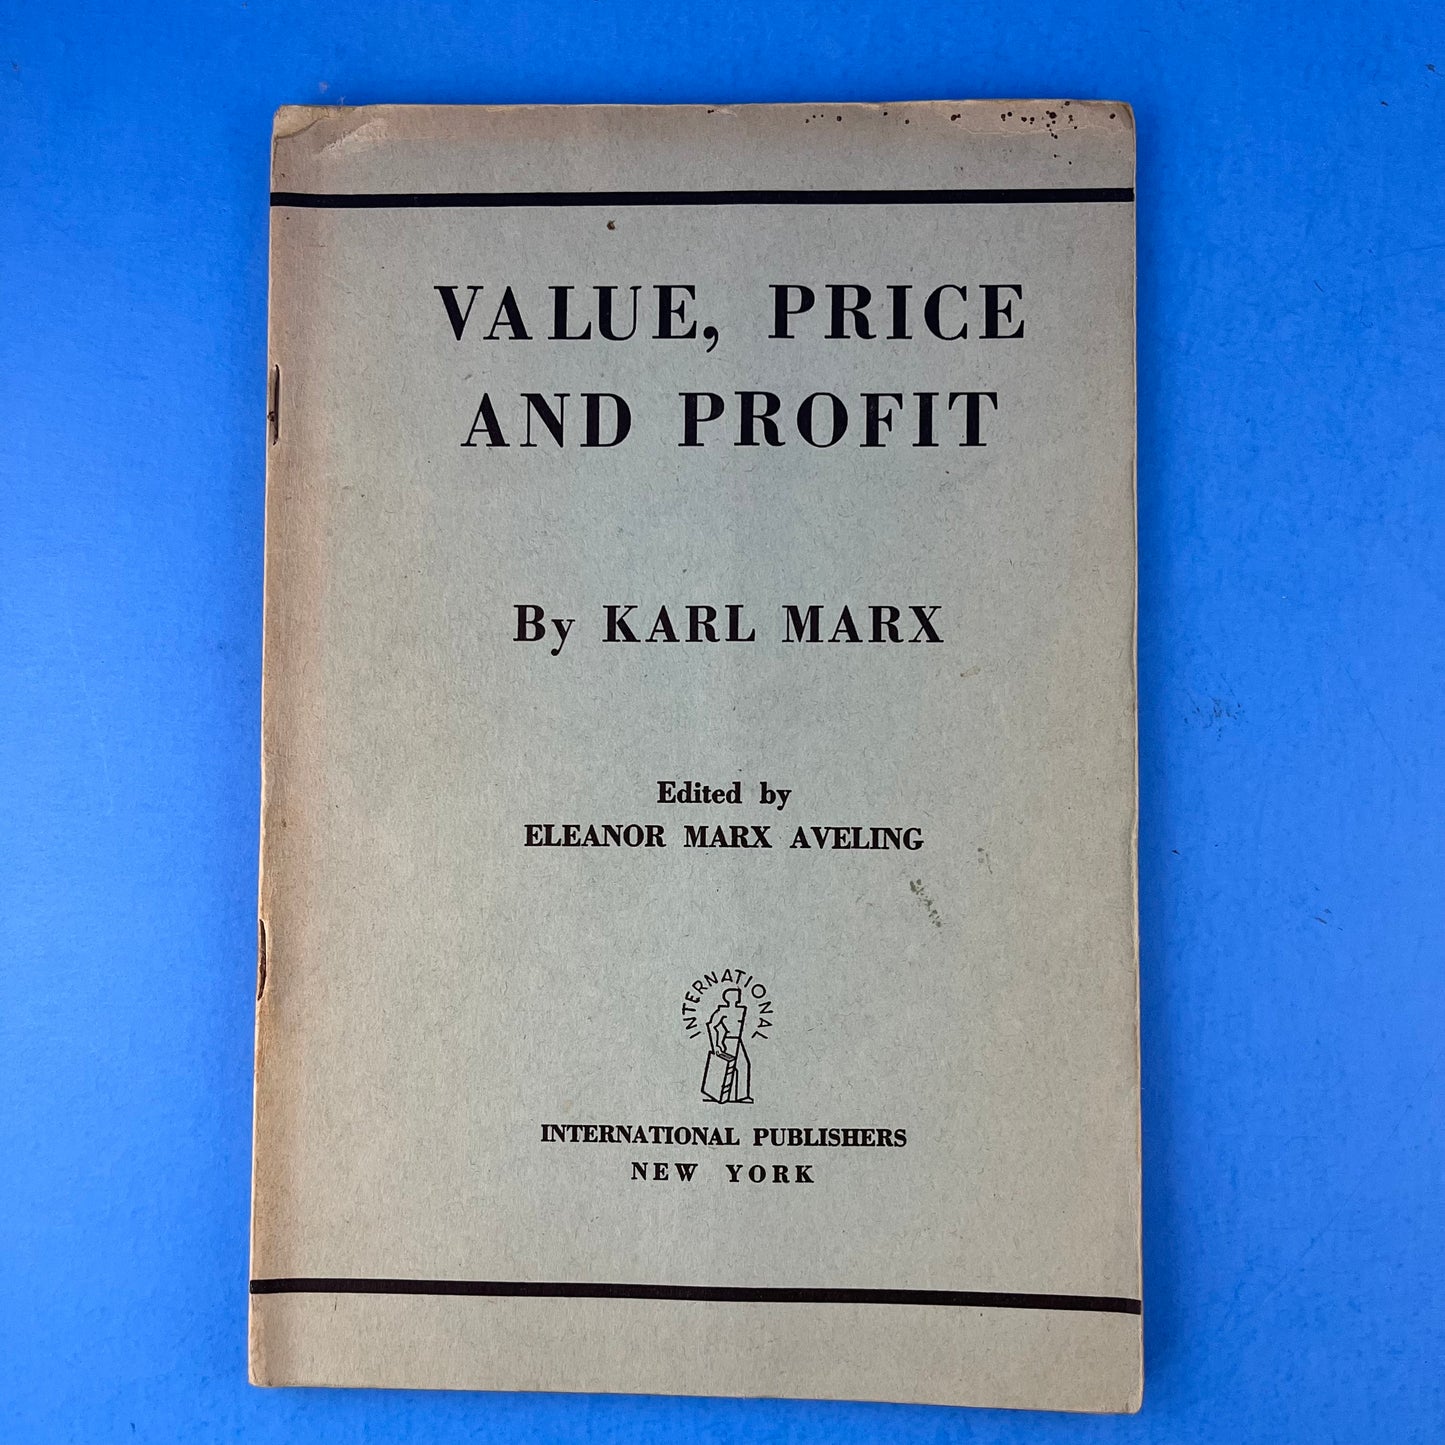 Value, Price and Profit